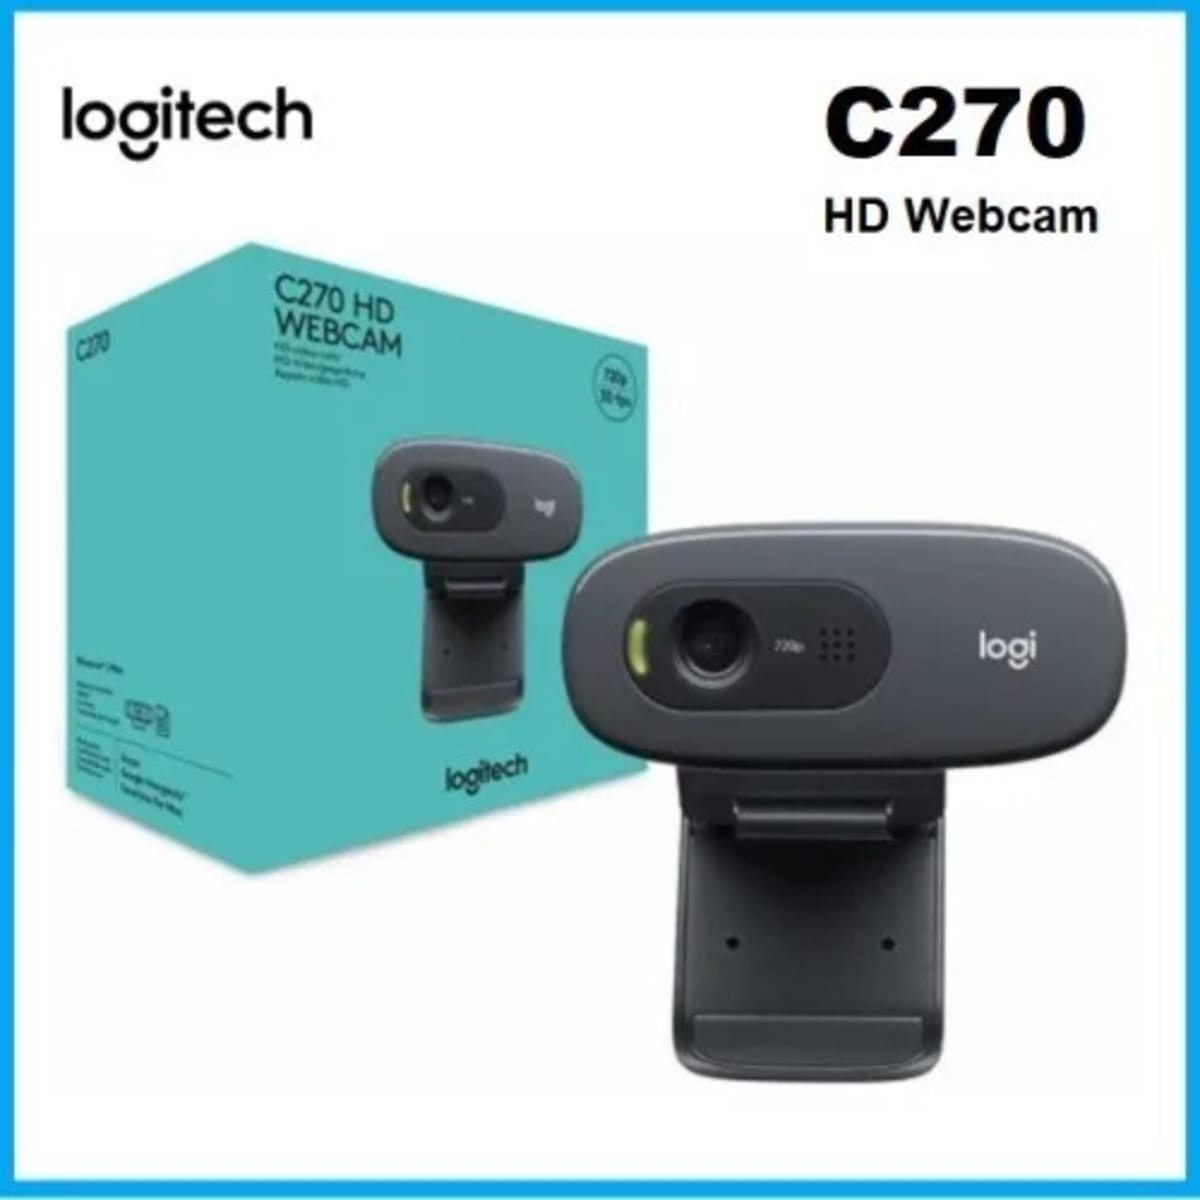 logitech c270 webcam guide - Apps on Google Play